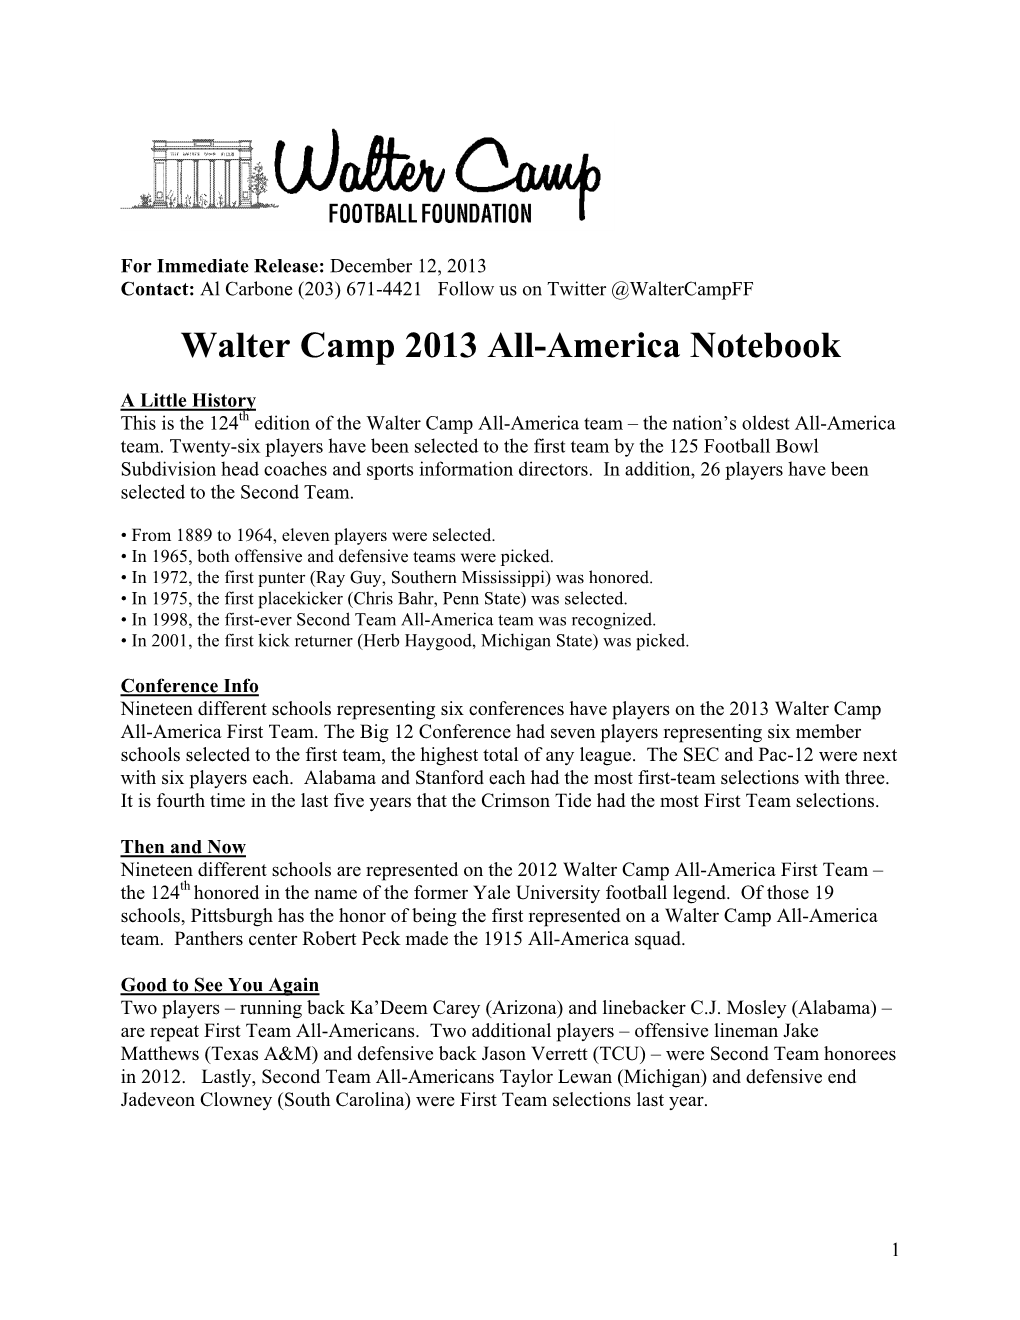 Walter Camp 2013 All-America Notebook